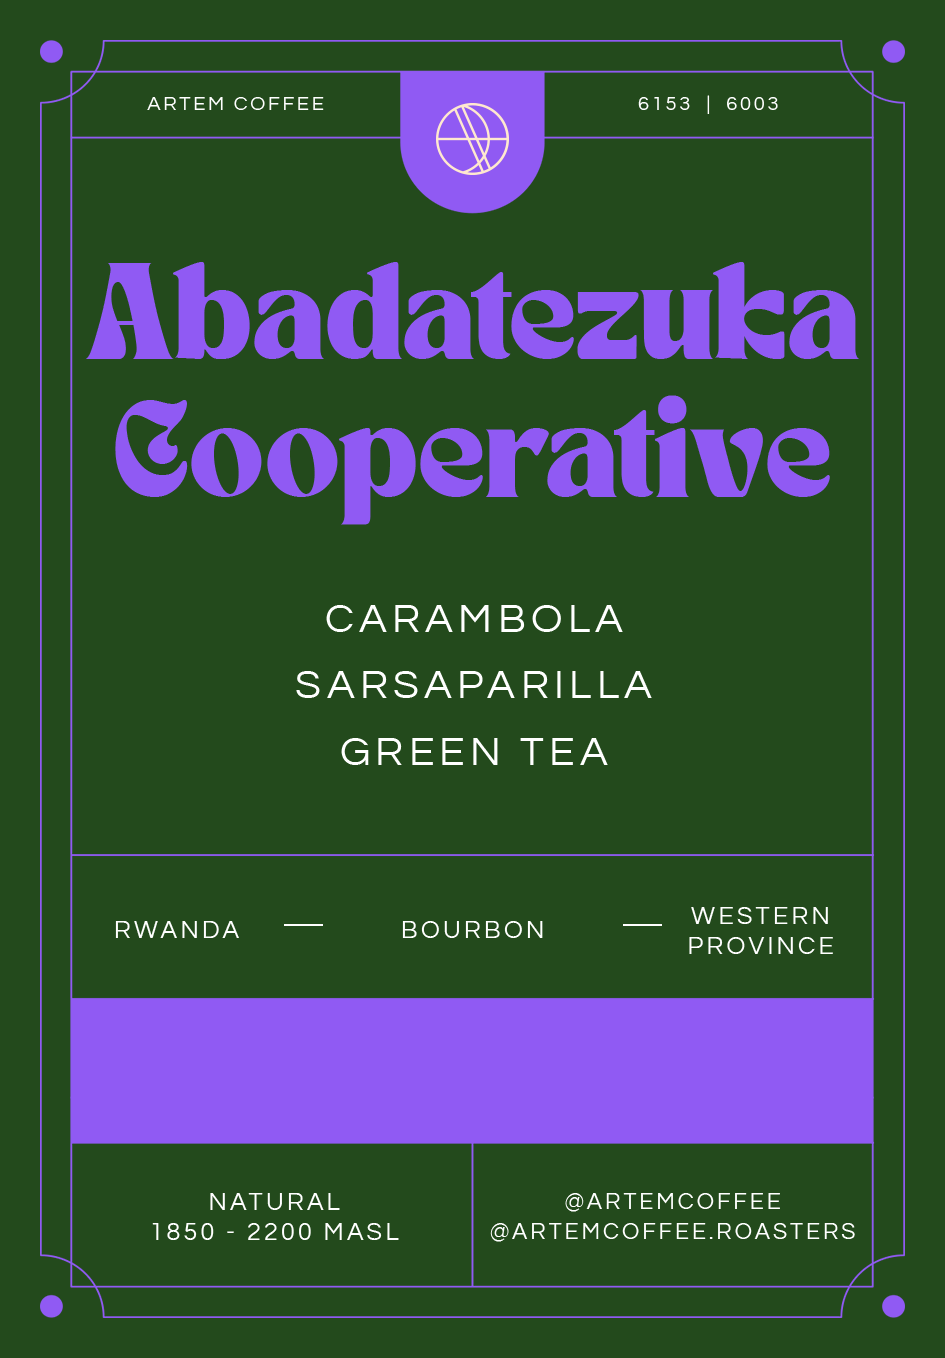 Rwanda Abadatezuka Cooperative